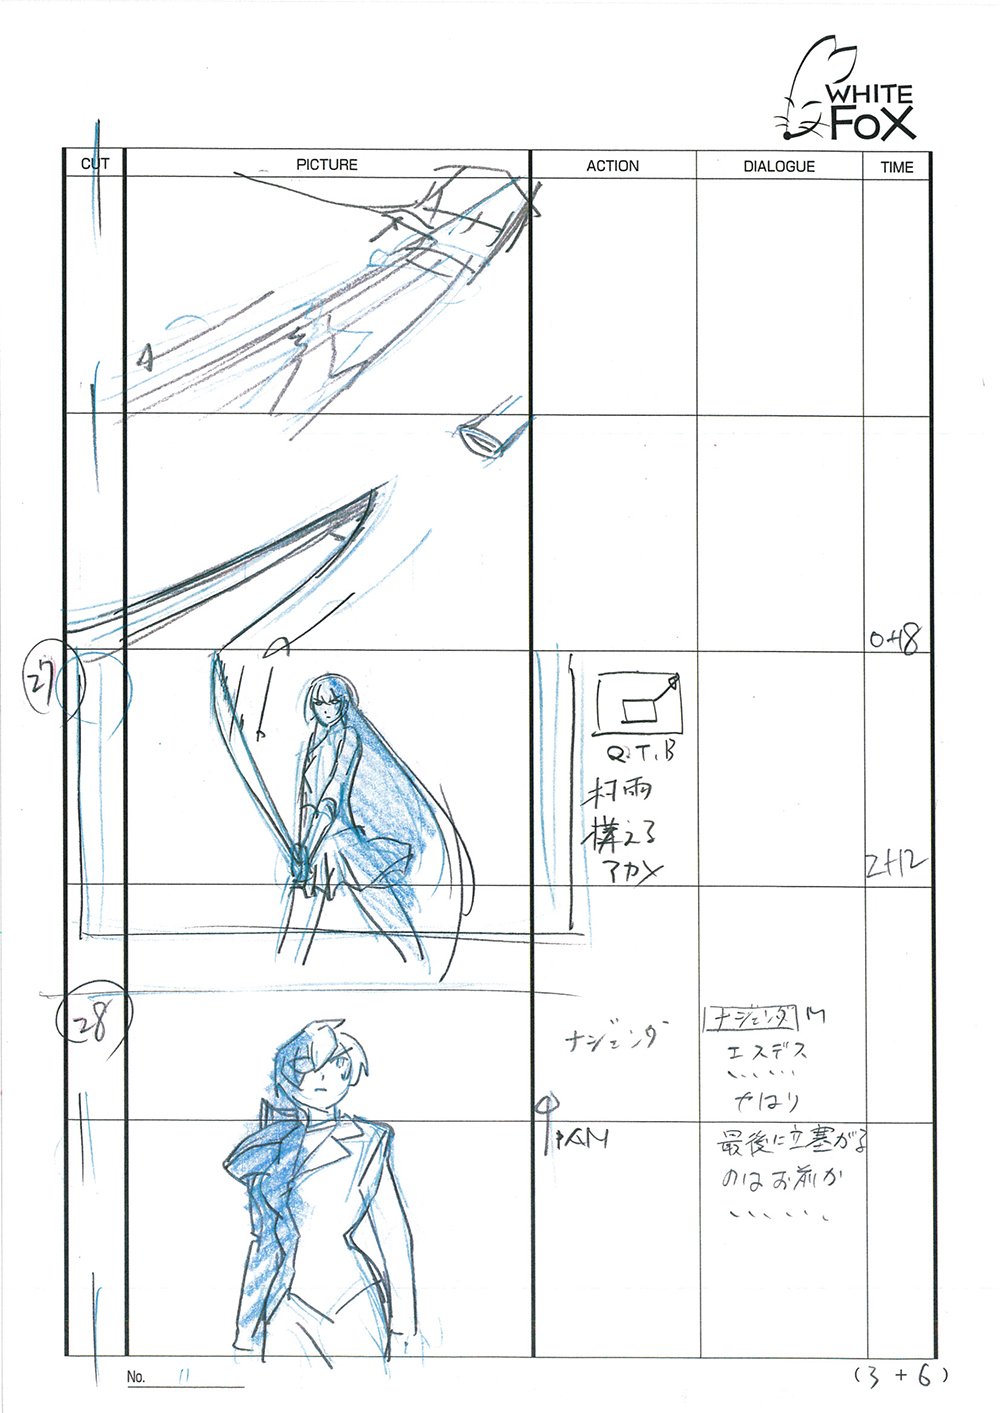 Akame ga Kill Episode 24 Storyboard Leak 013